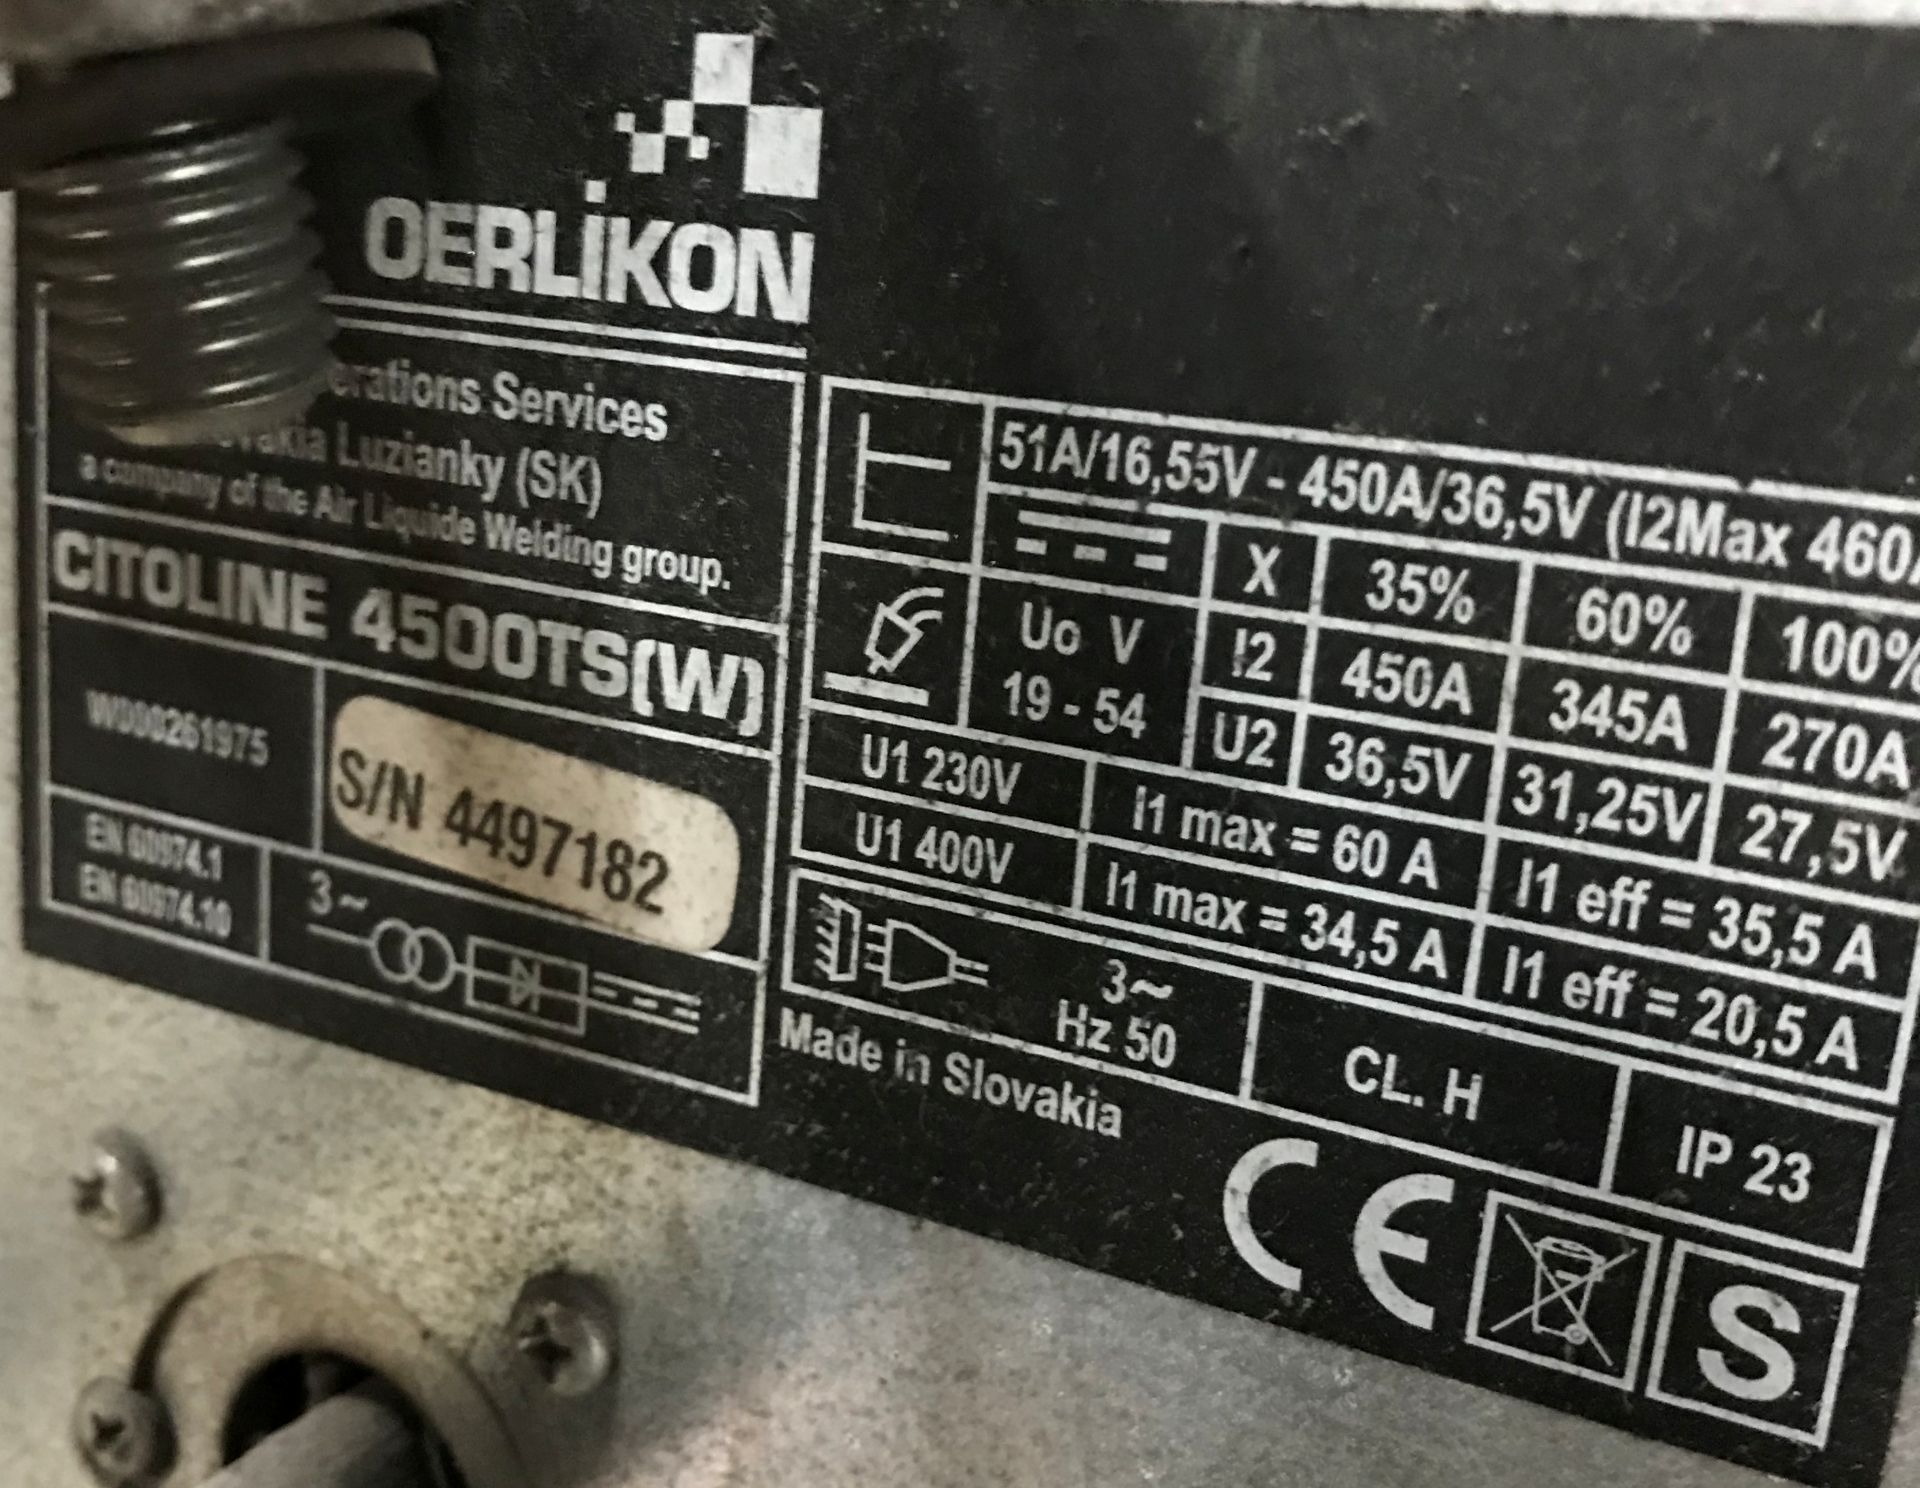 Oerlikon Citoline 4500TS (W) welder with Oerlikon power supply - Image 8 of 9